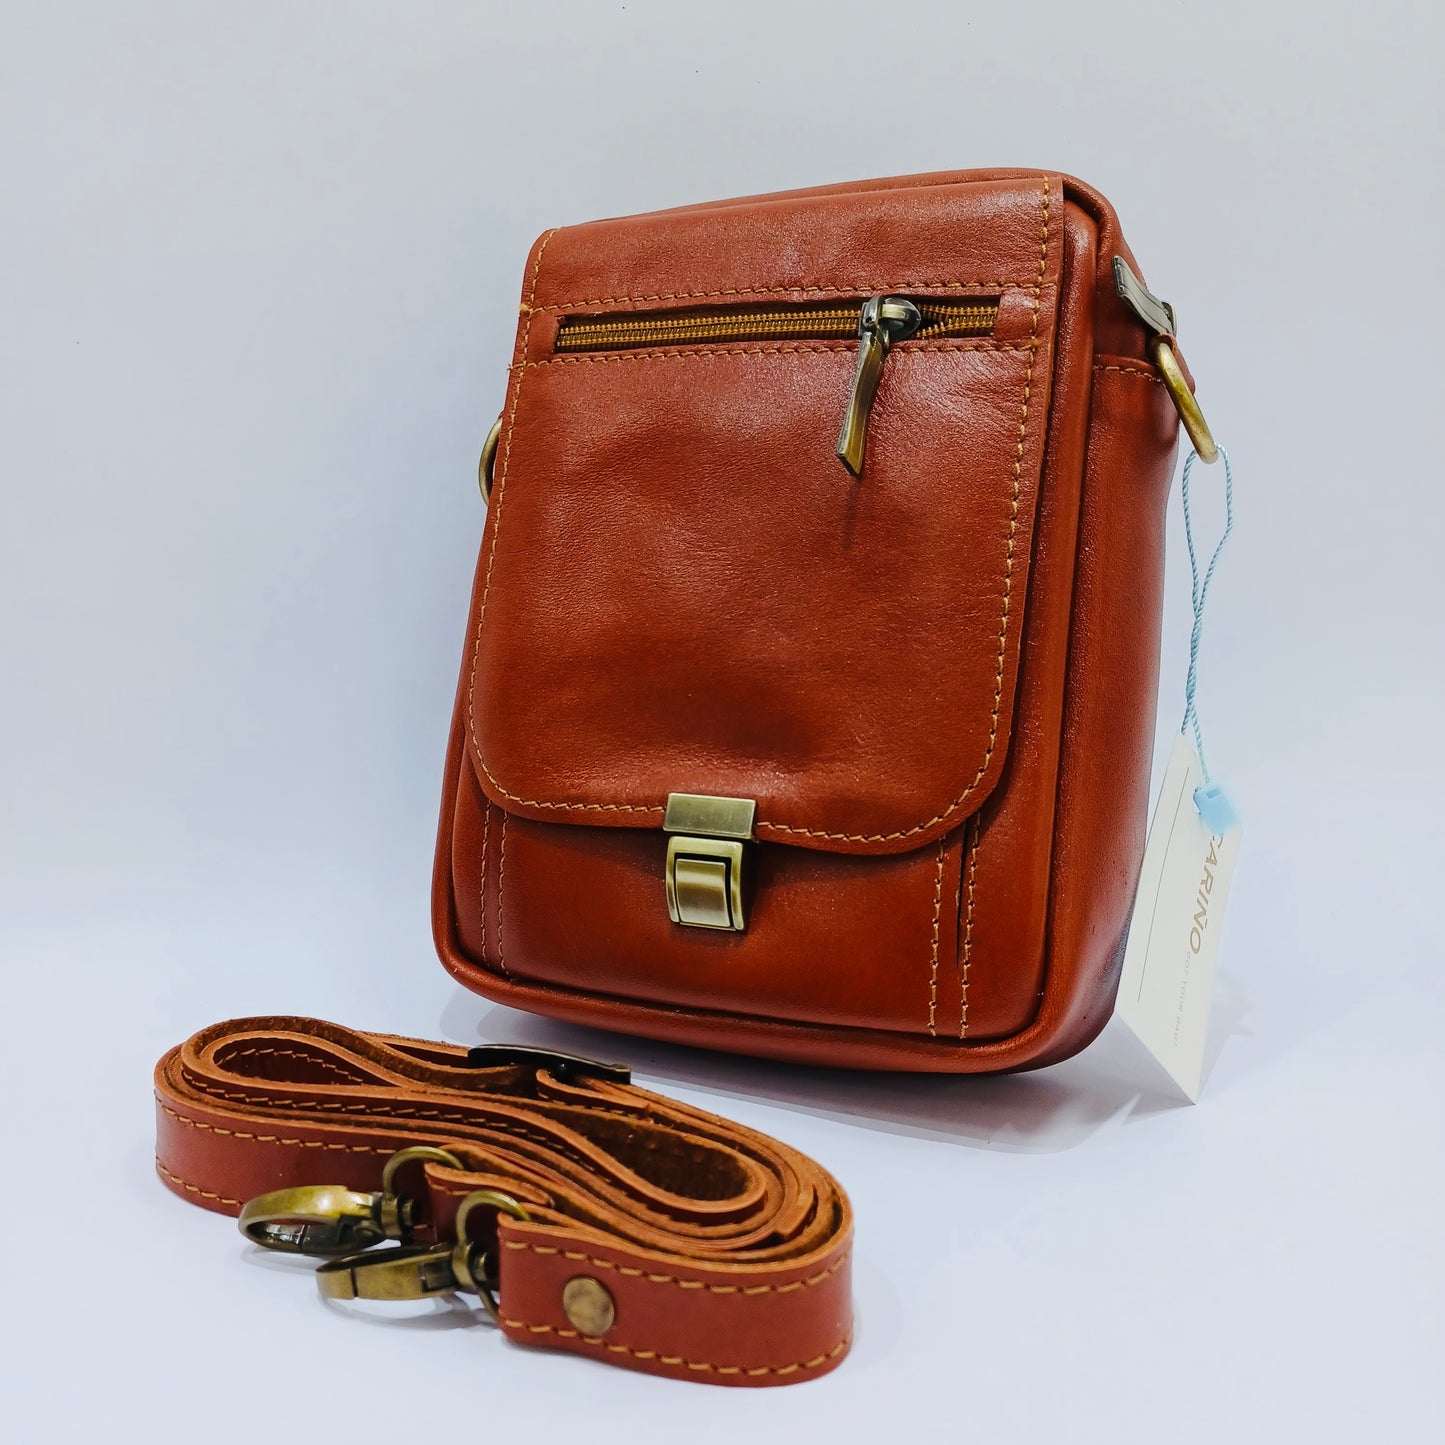 Premium Leather Bag Male #71